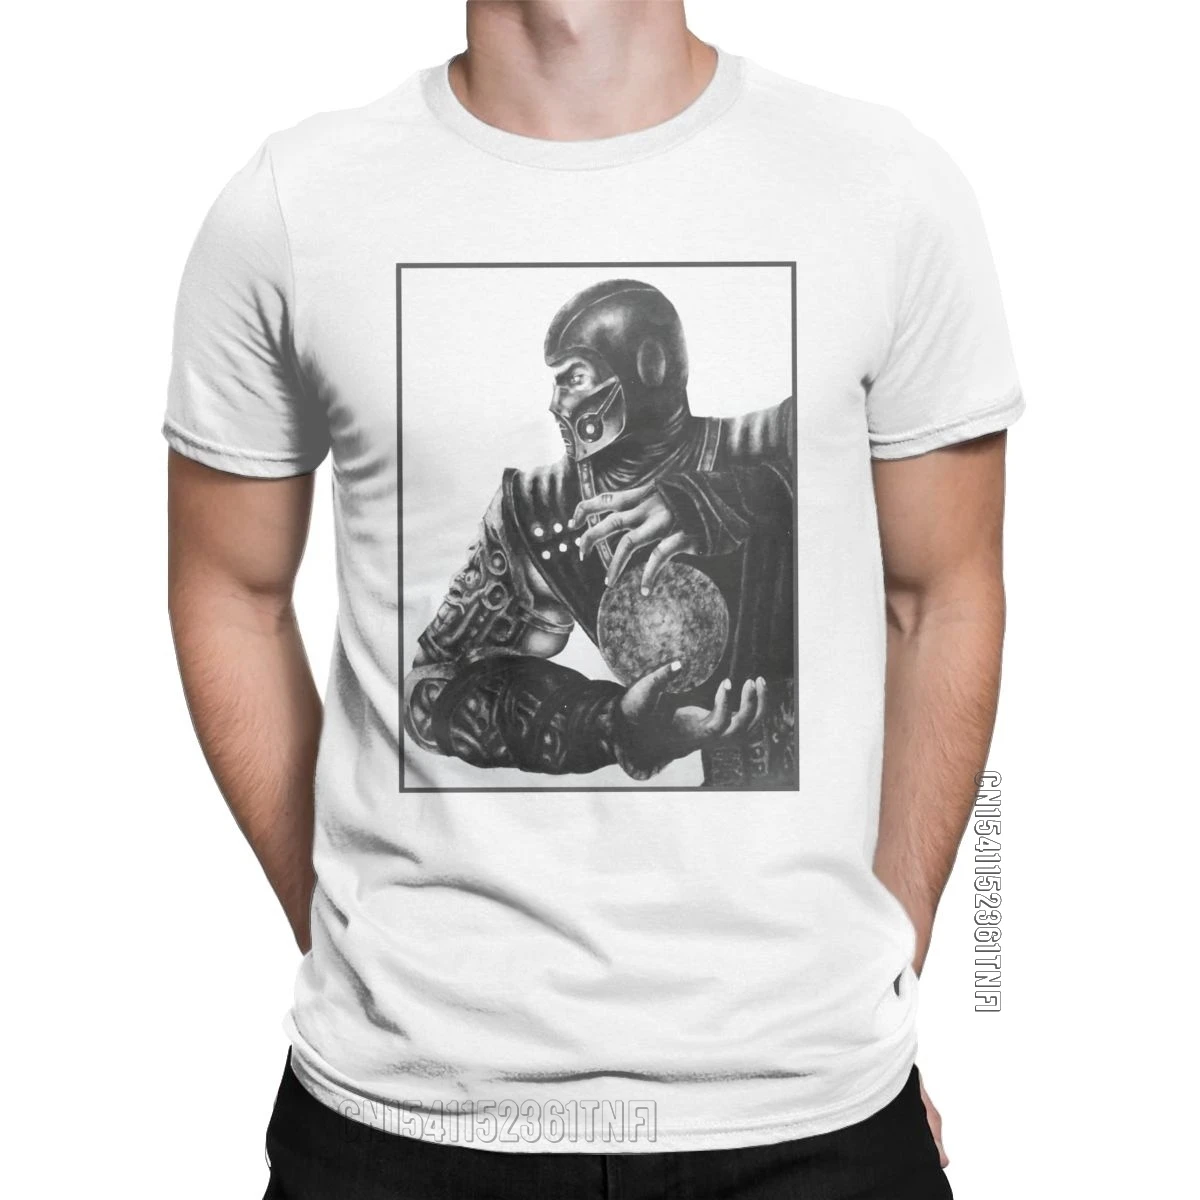 

Sub Zero Mortal Kombat MK T-Shirt Men Casual Cotton Tee Shirt Crew Neck Classic Short Sleeve T Shirt New Arrival Tops